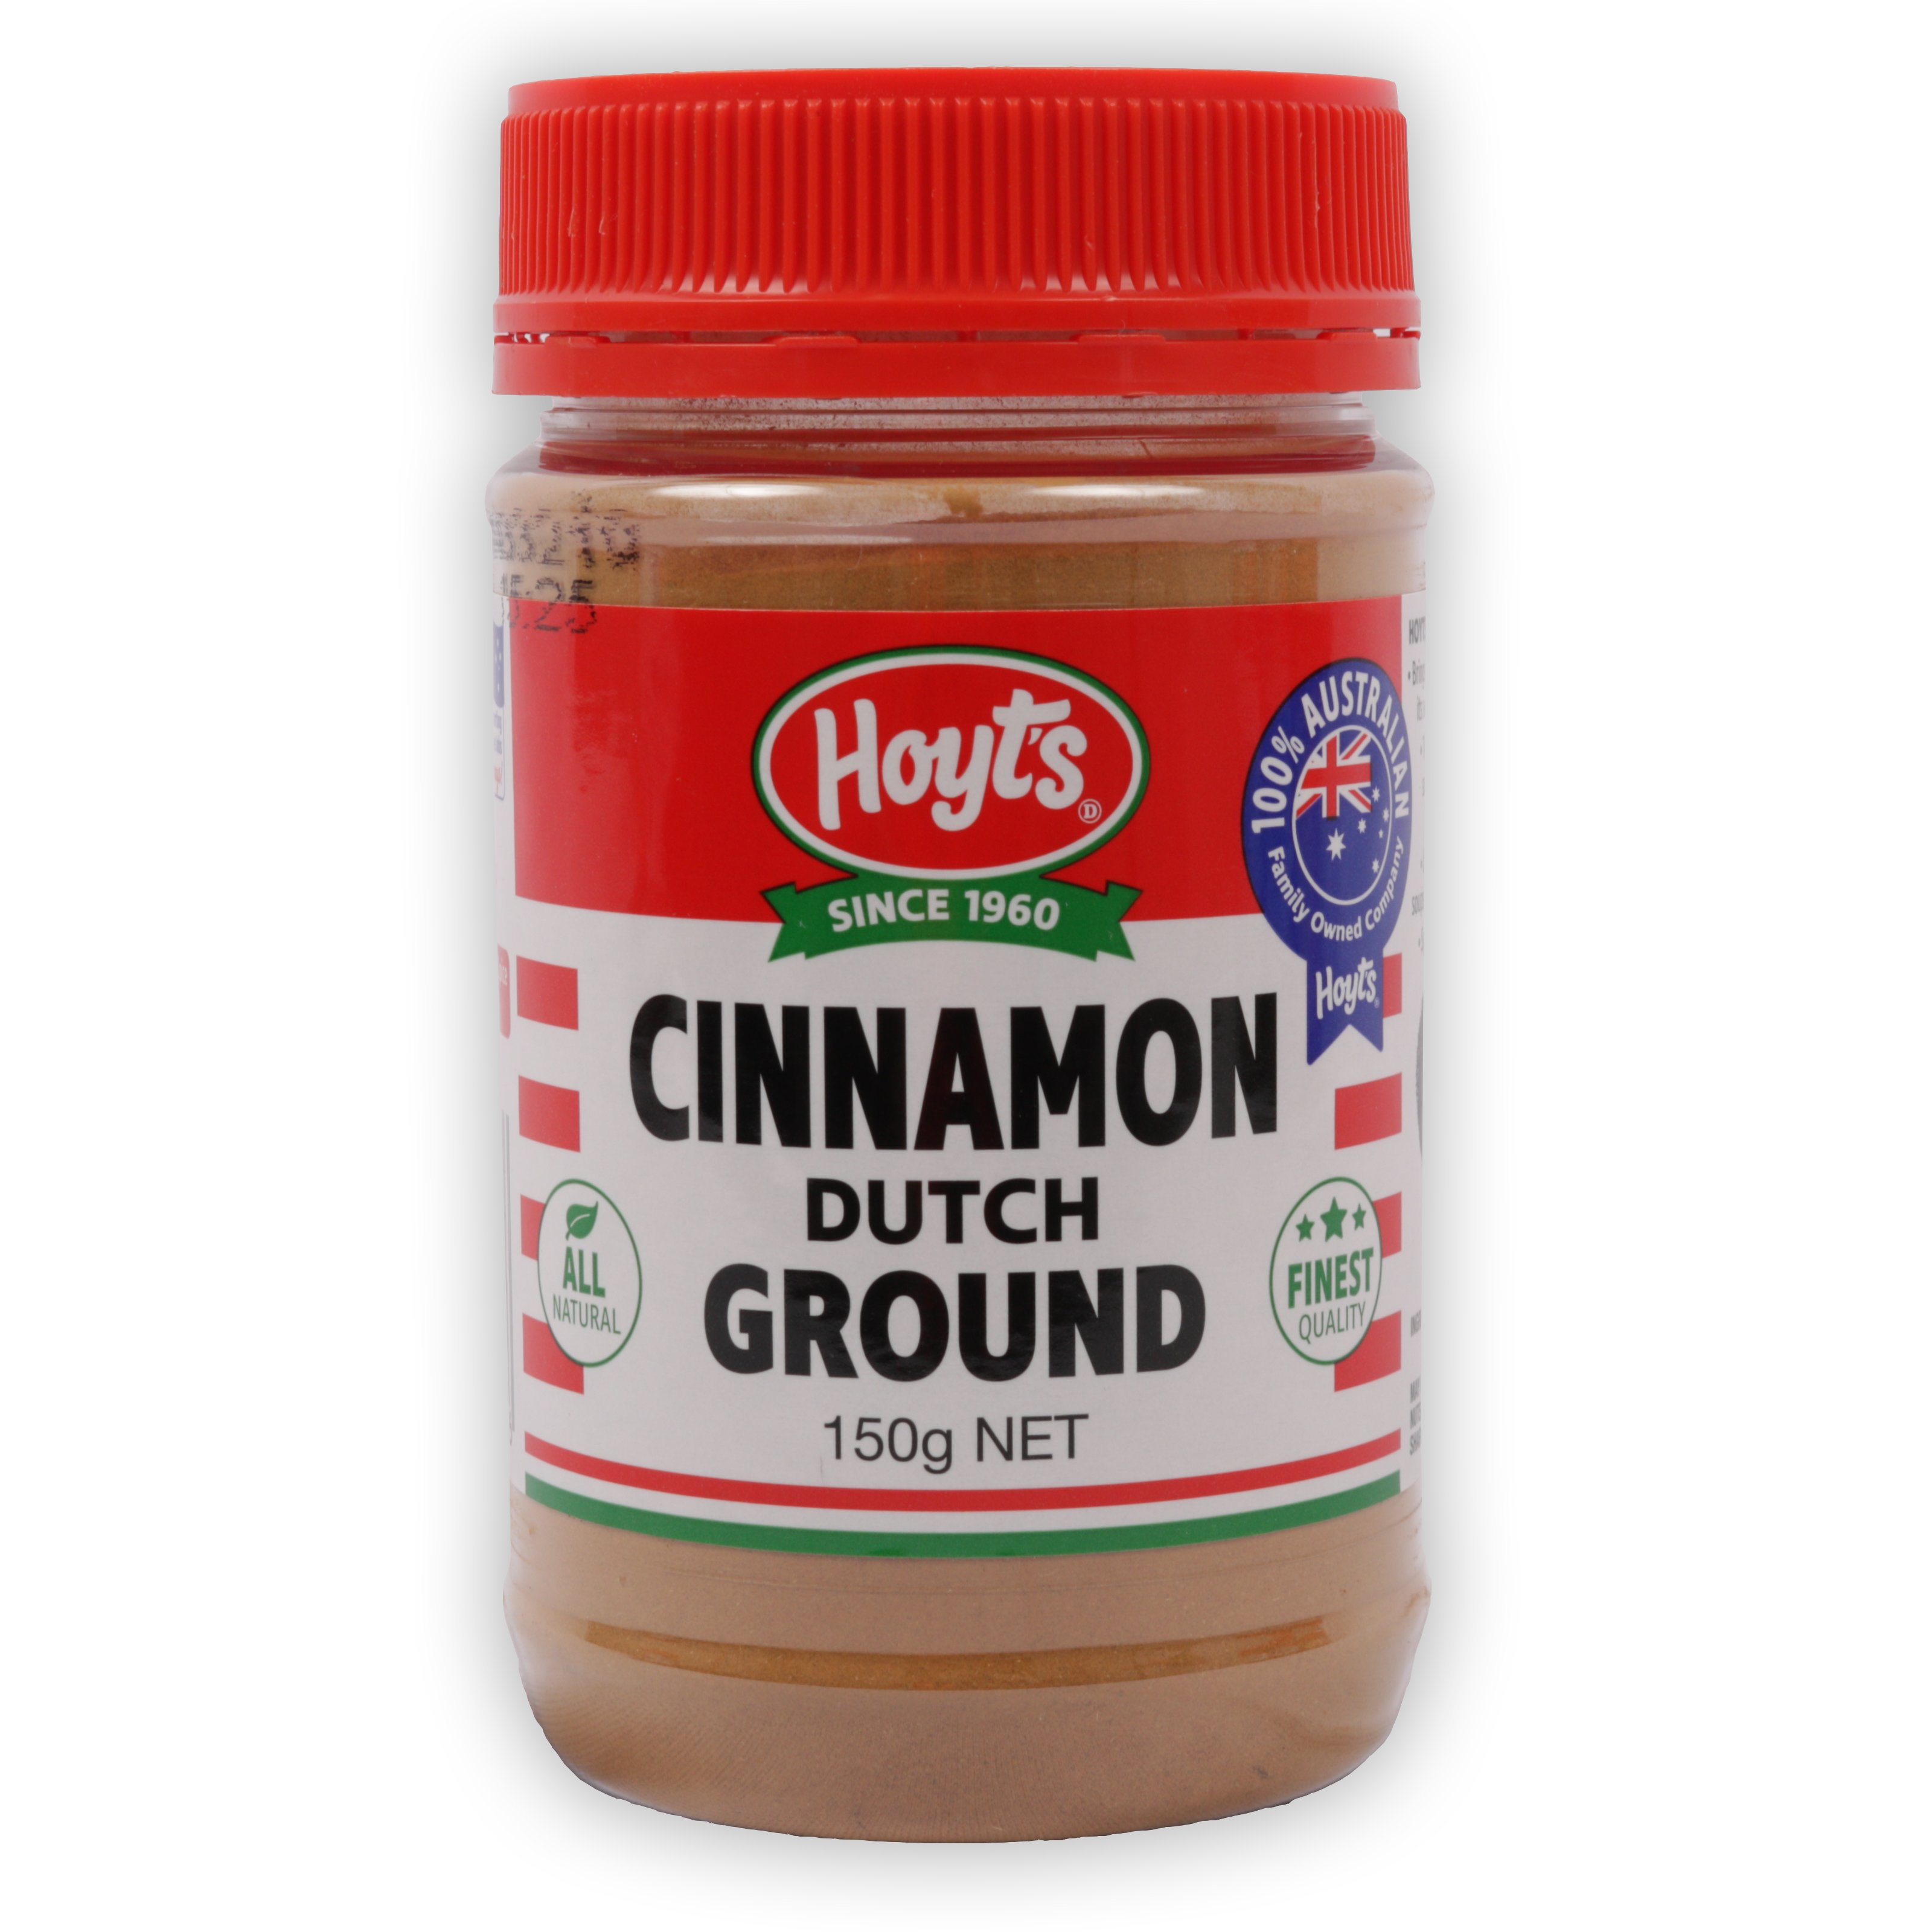 Hoyts Cinnamon Dutch Ground 150g